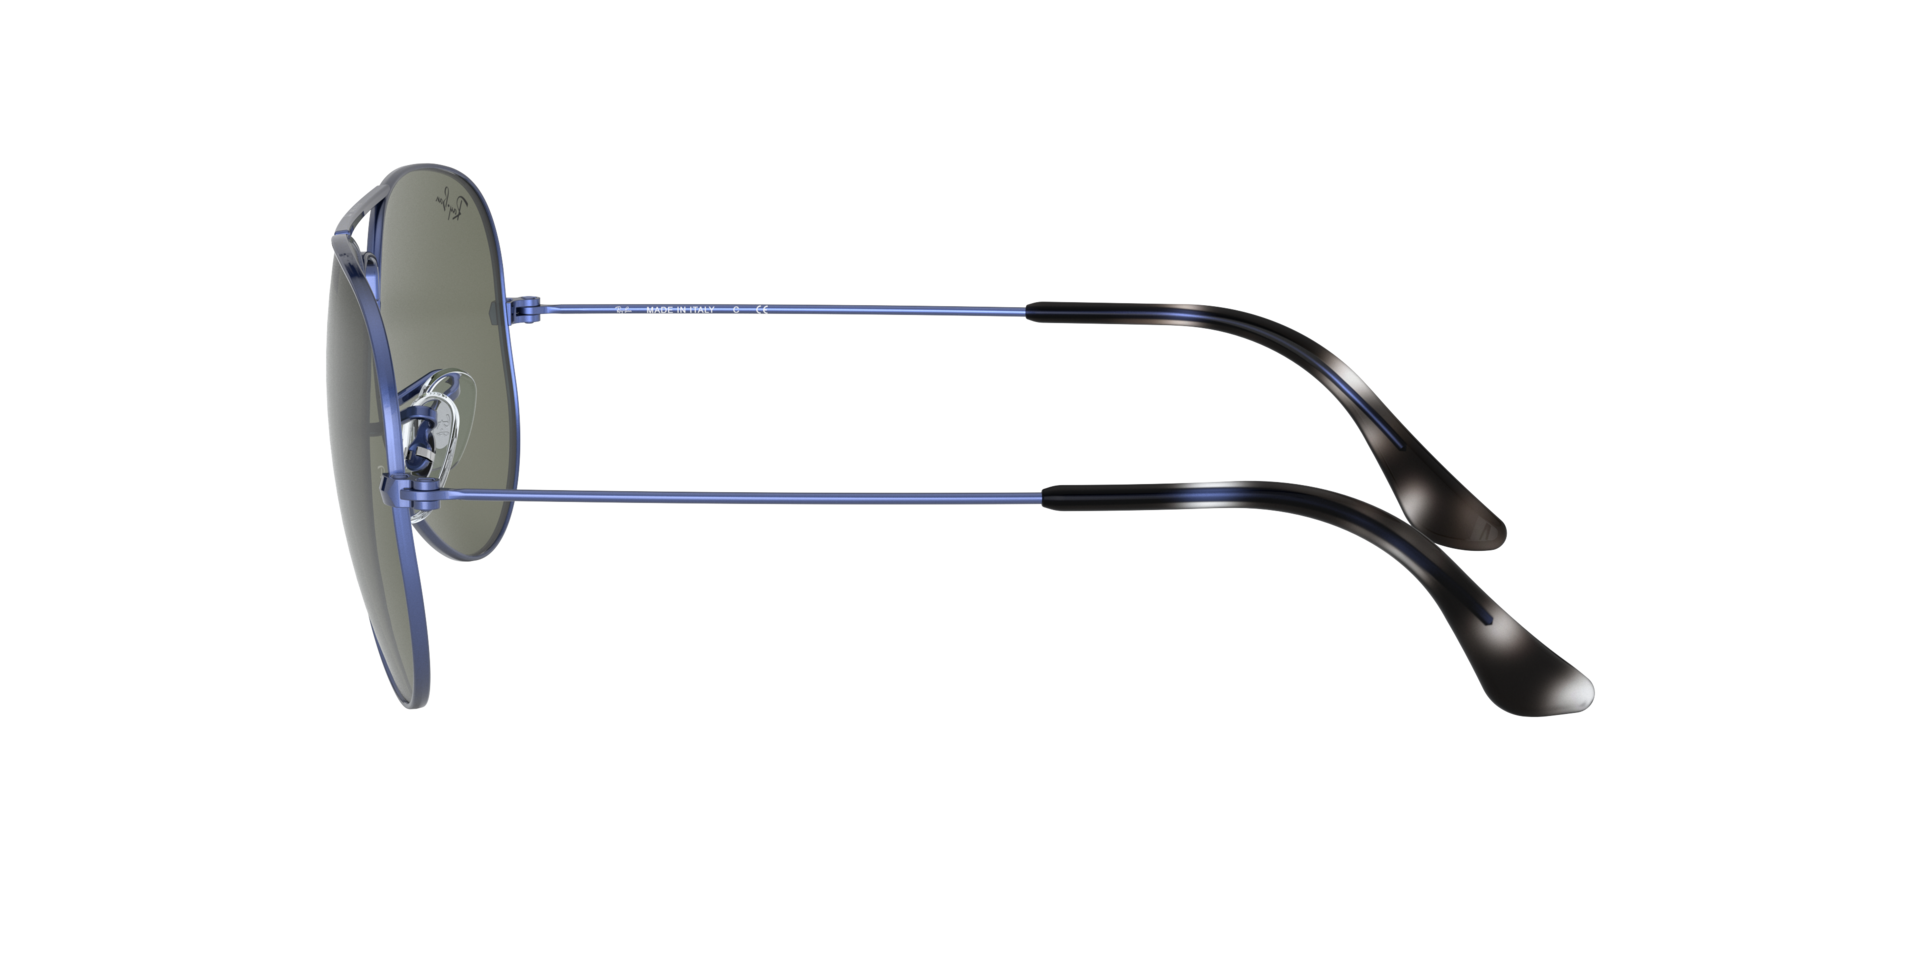 Buy Best Ray-Ban Aviator Classic Sunglasses Online.